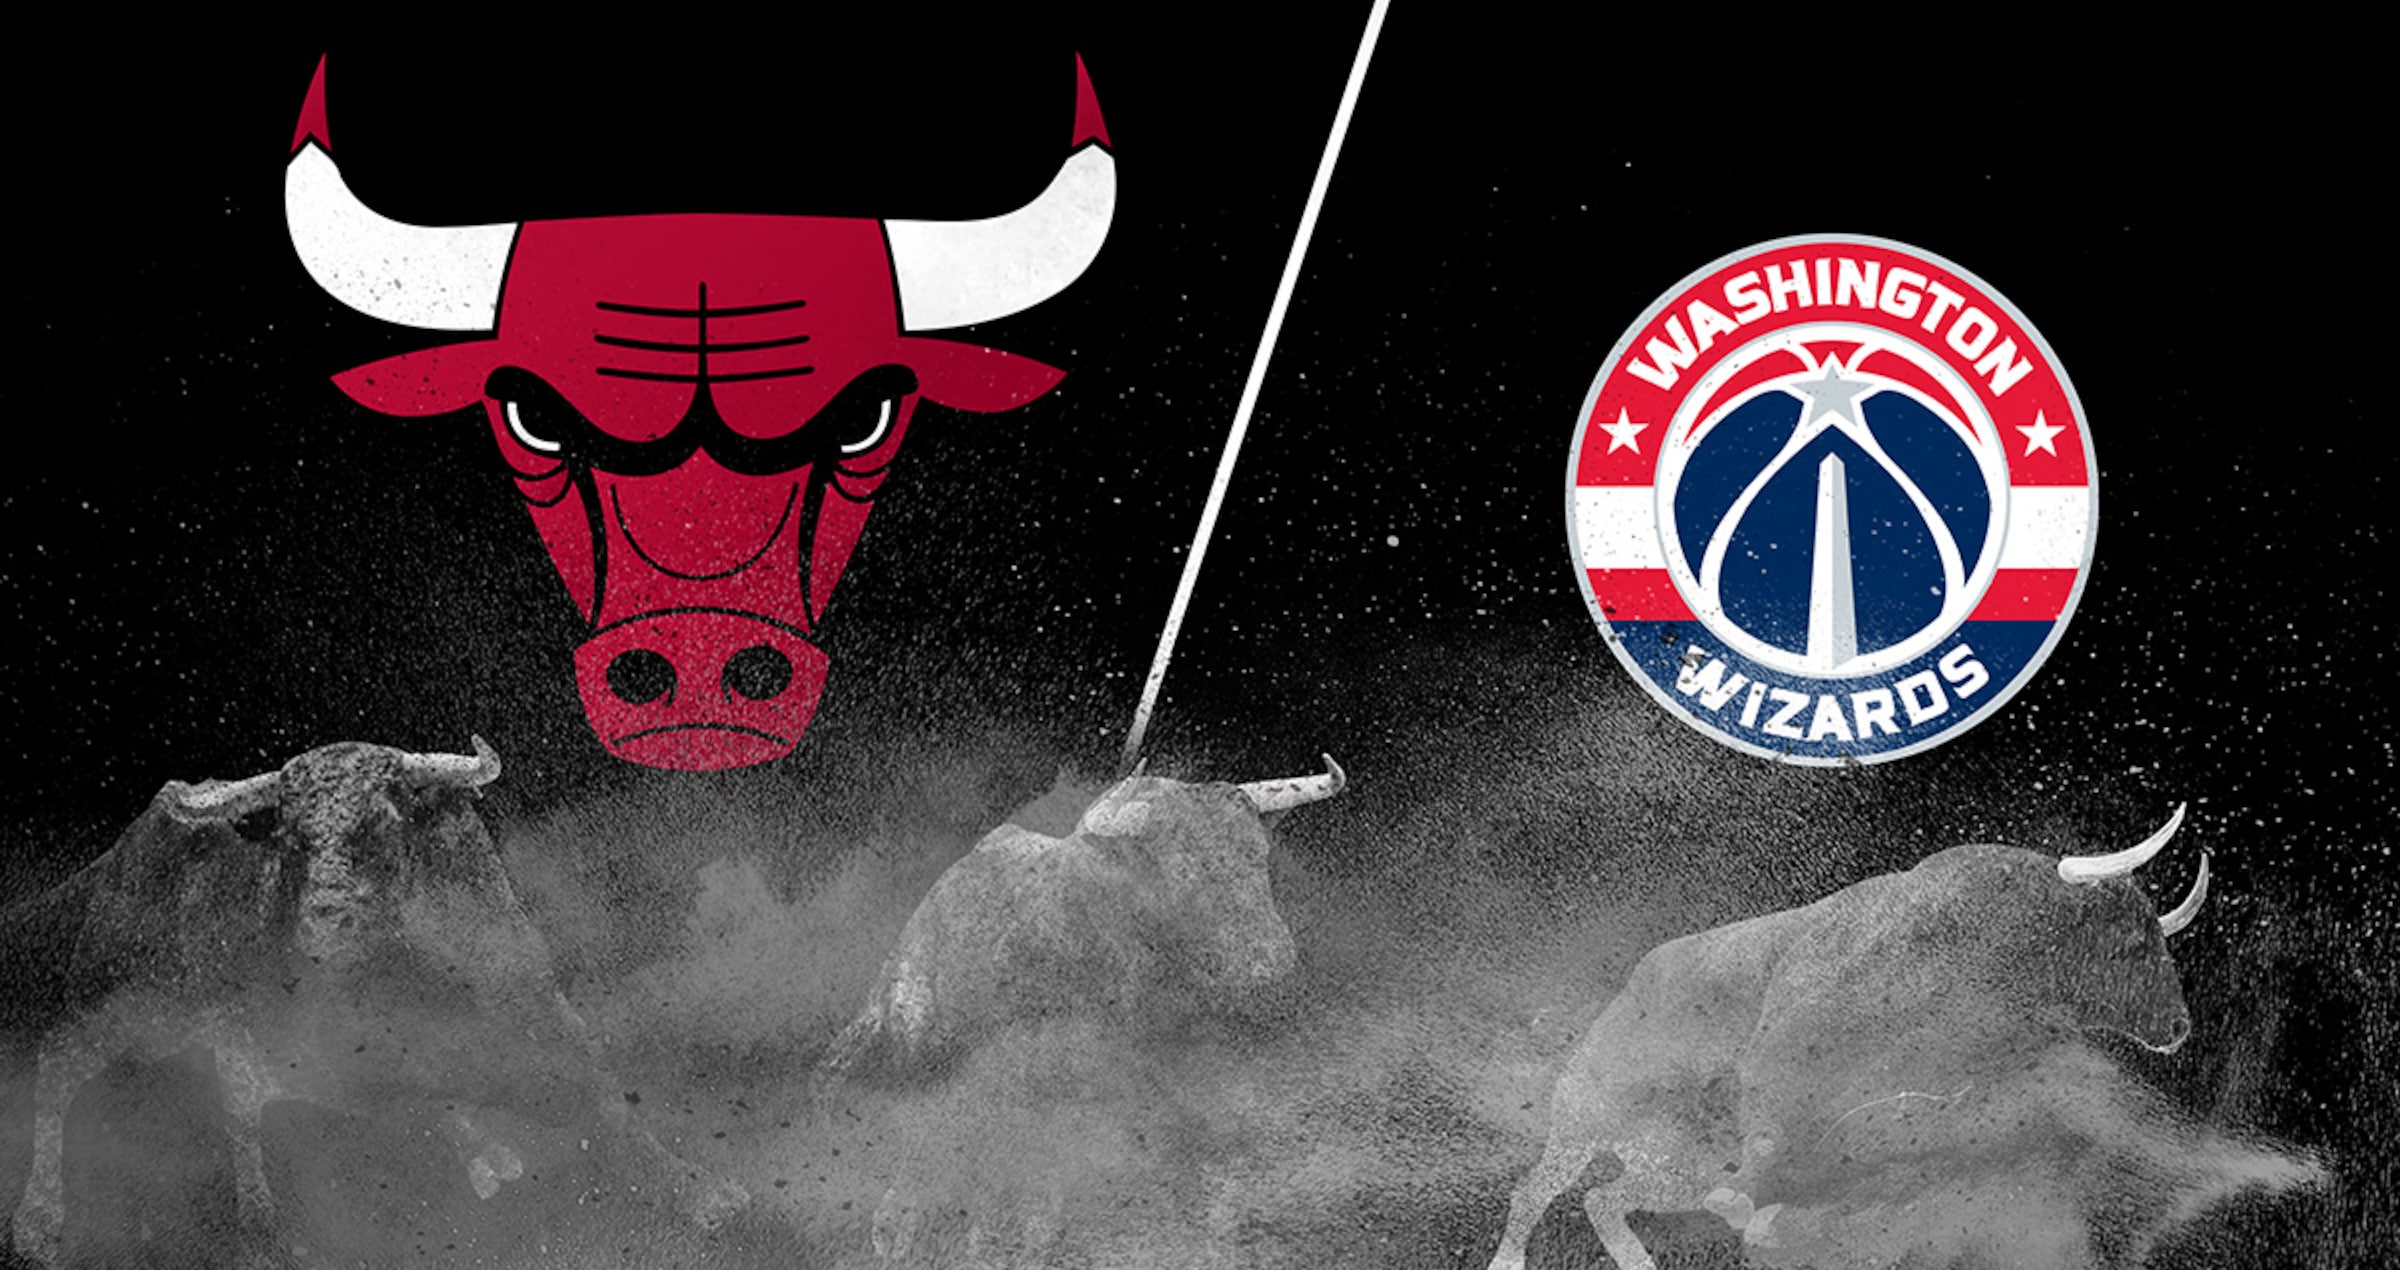 Washington Wizards at Chicago Bulls